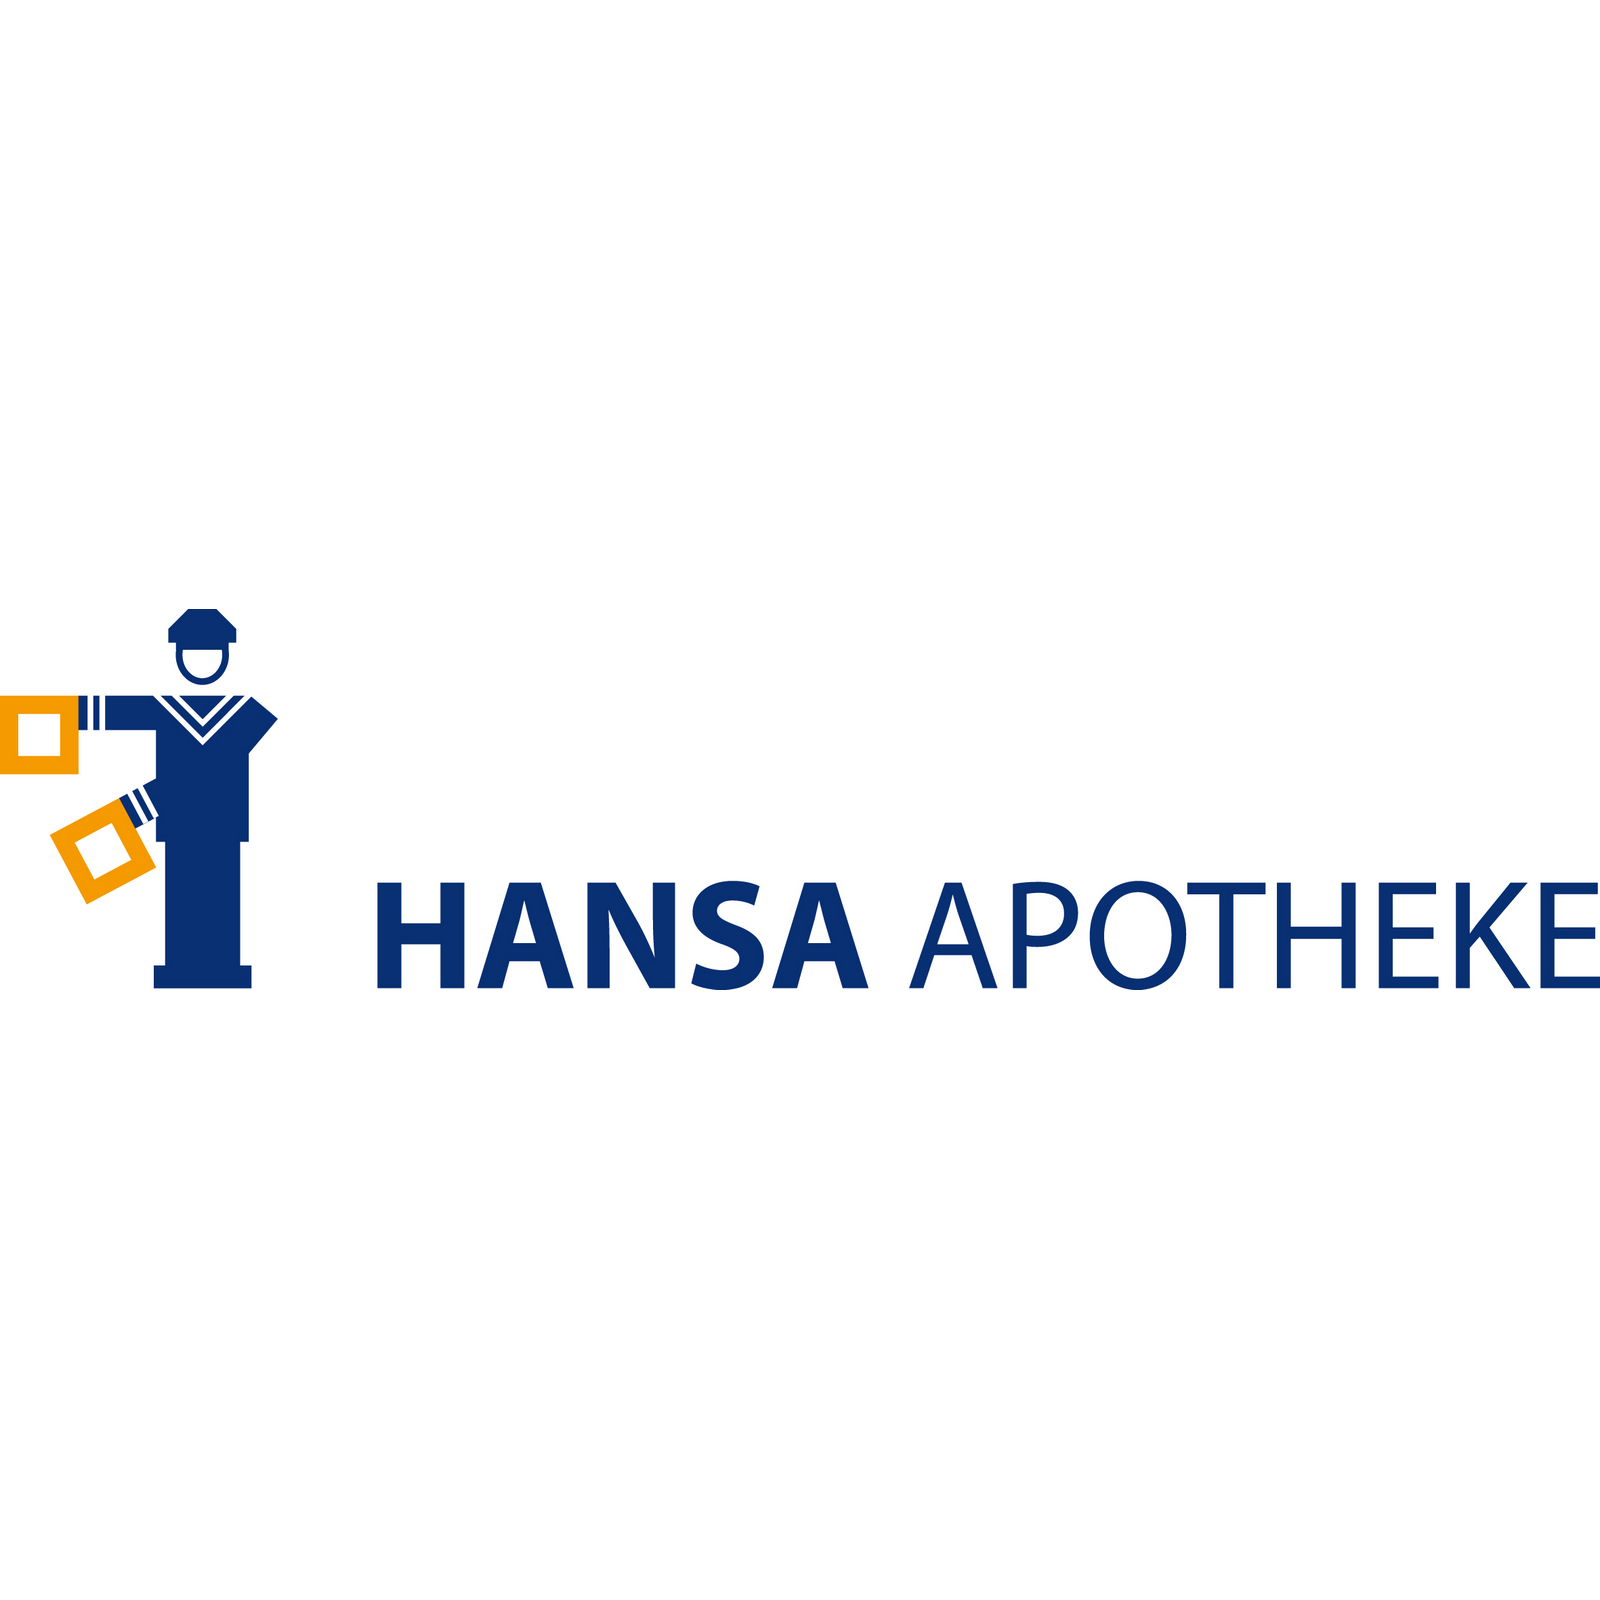 Hansa Apotheke Logo